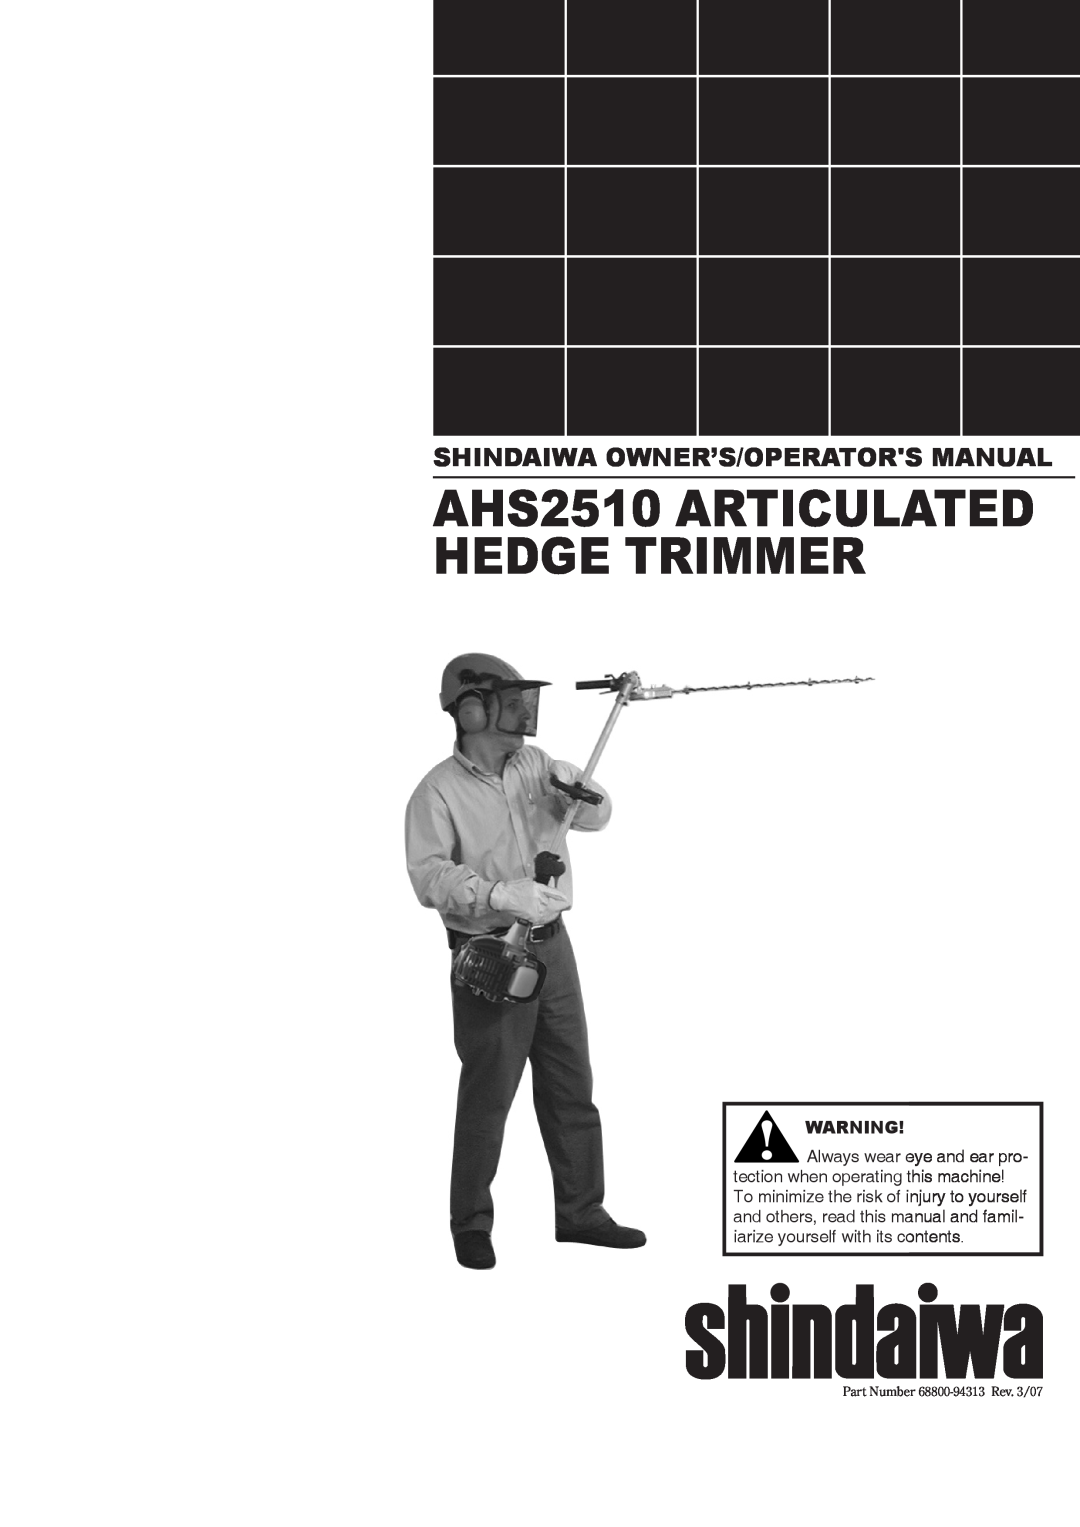 Shindaiwa 68800-94313 manual AHS2510 ARTICULATED HEDGE TRIMMER, Shindaiwa Owner’S/Operators Manual 